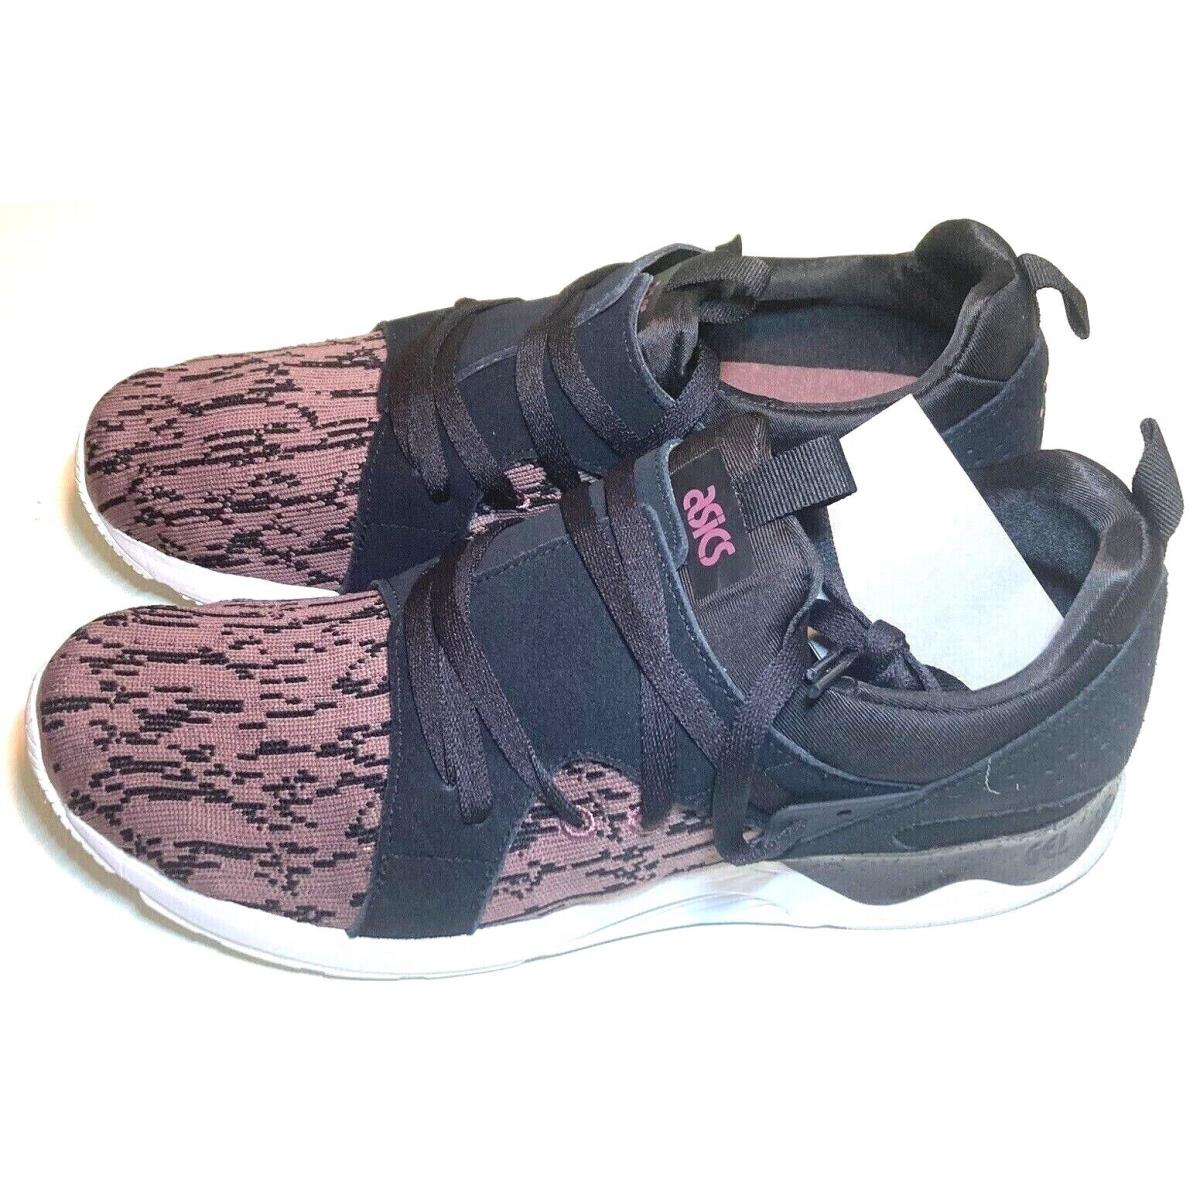 Asics Gel-lyte V Sanze Mens Rose Taupe/black Lace Up Running Sneaker Comfort